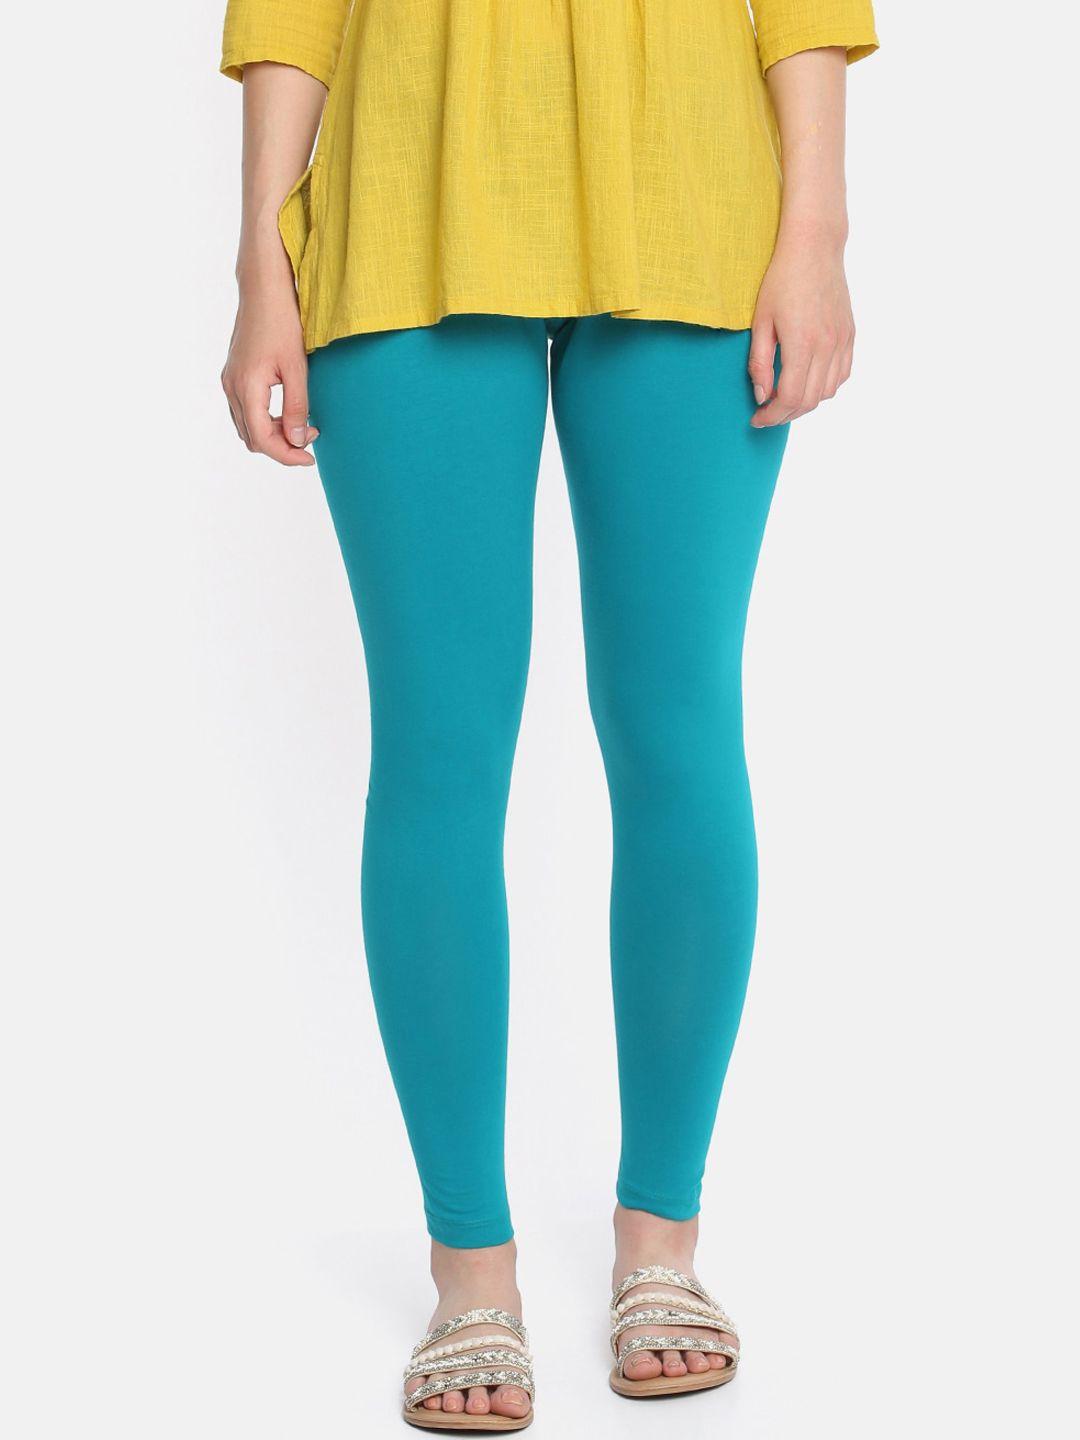 dollar-missy-women-turquoise-blue-solid-ankle-length-leggings